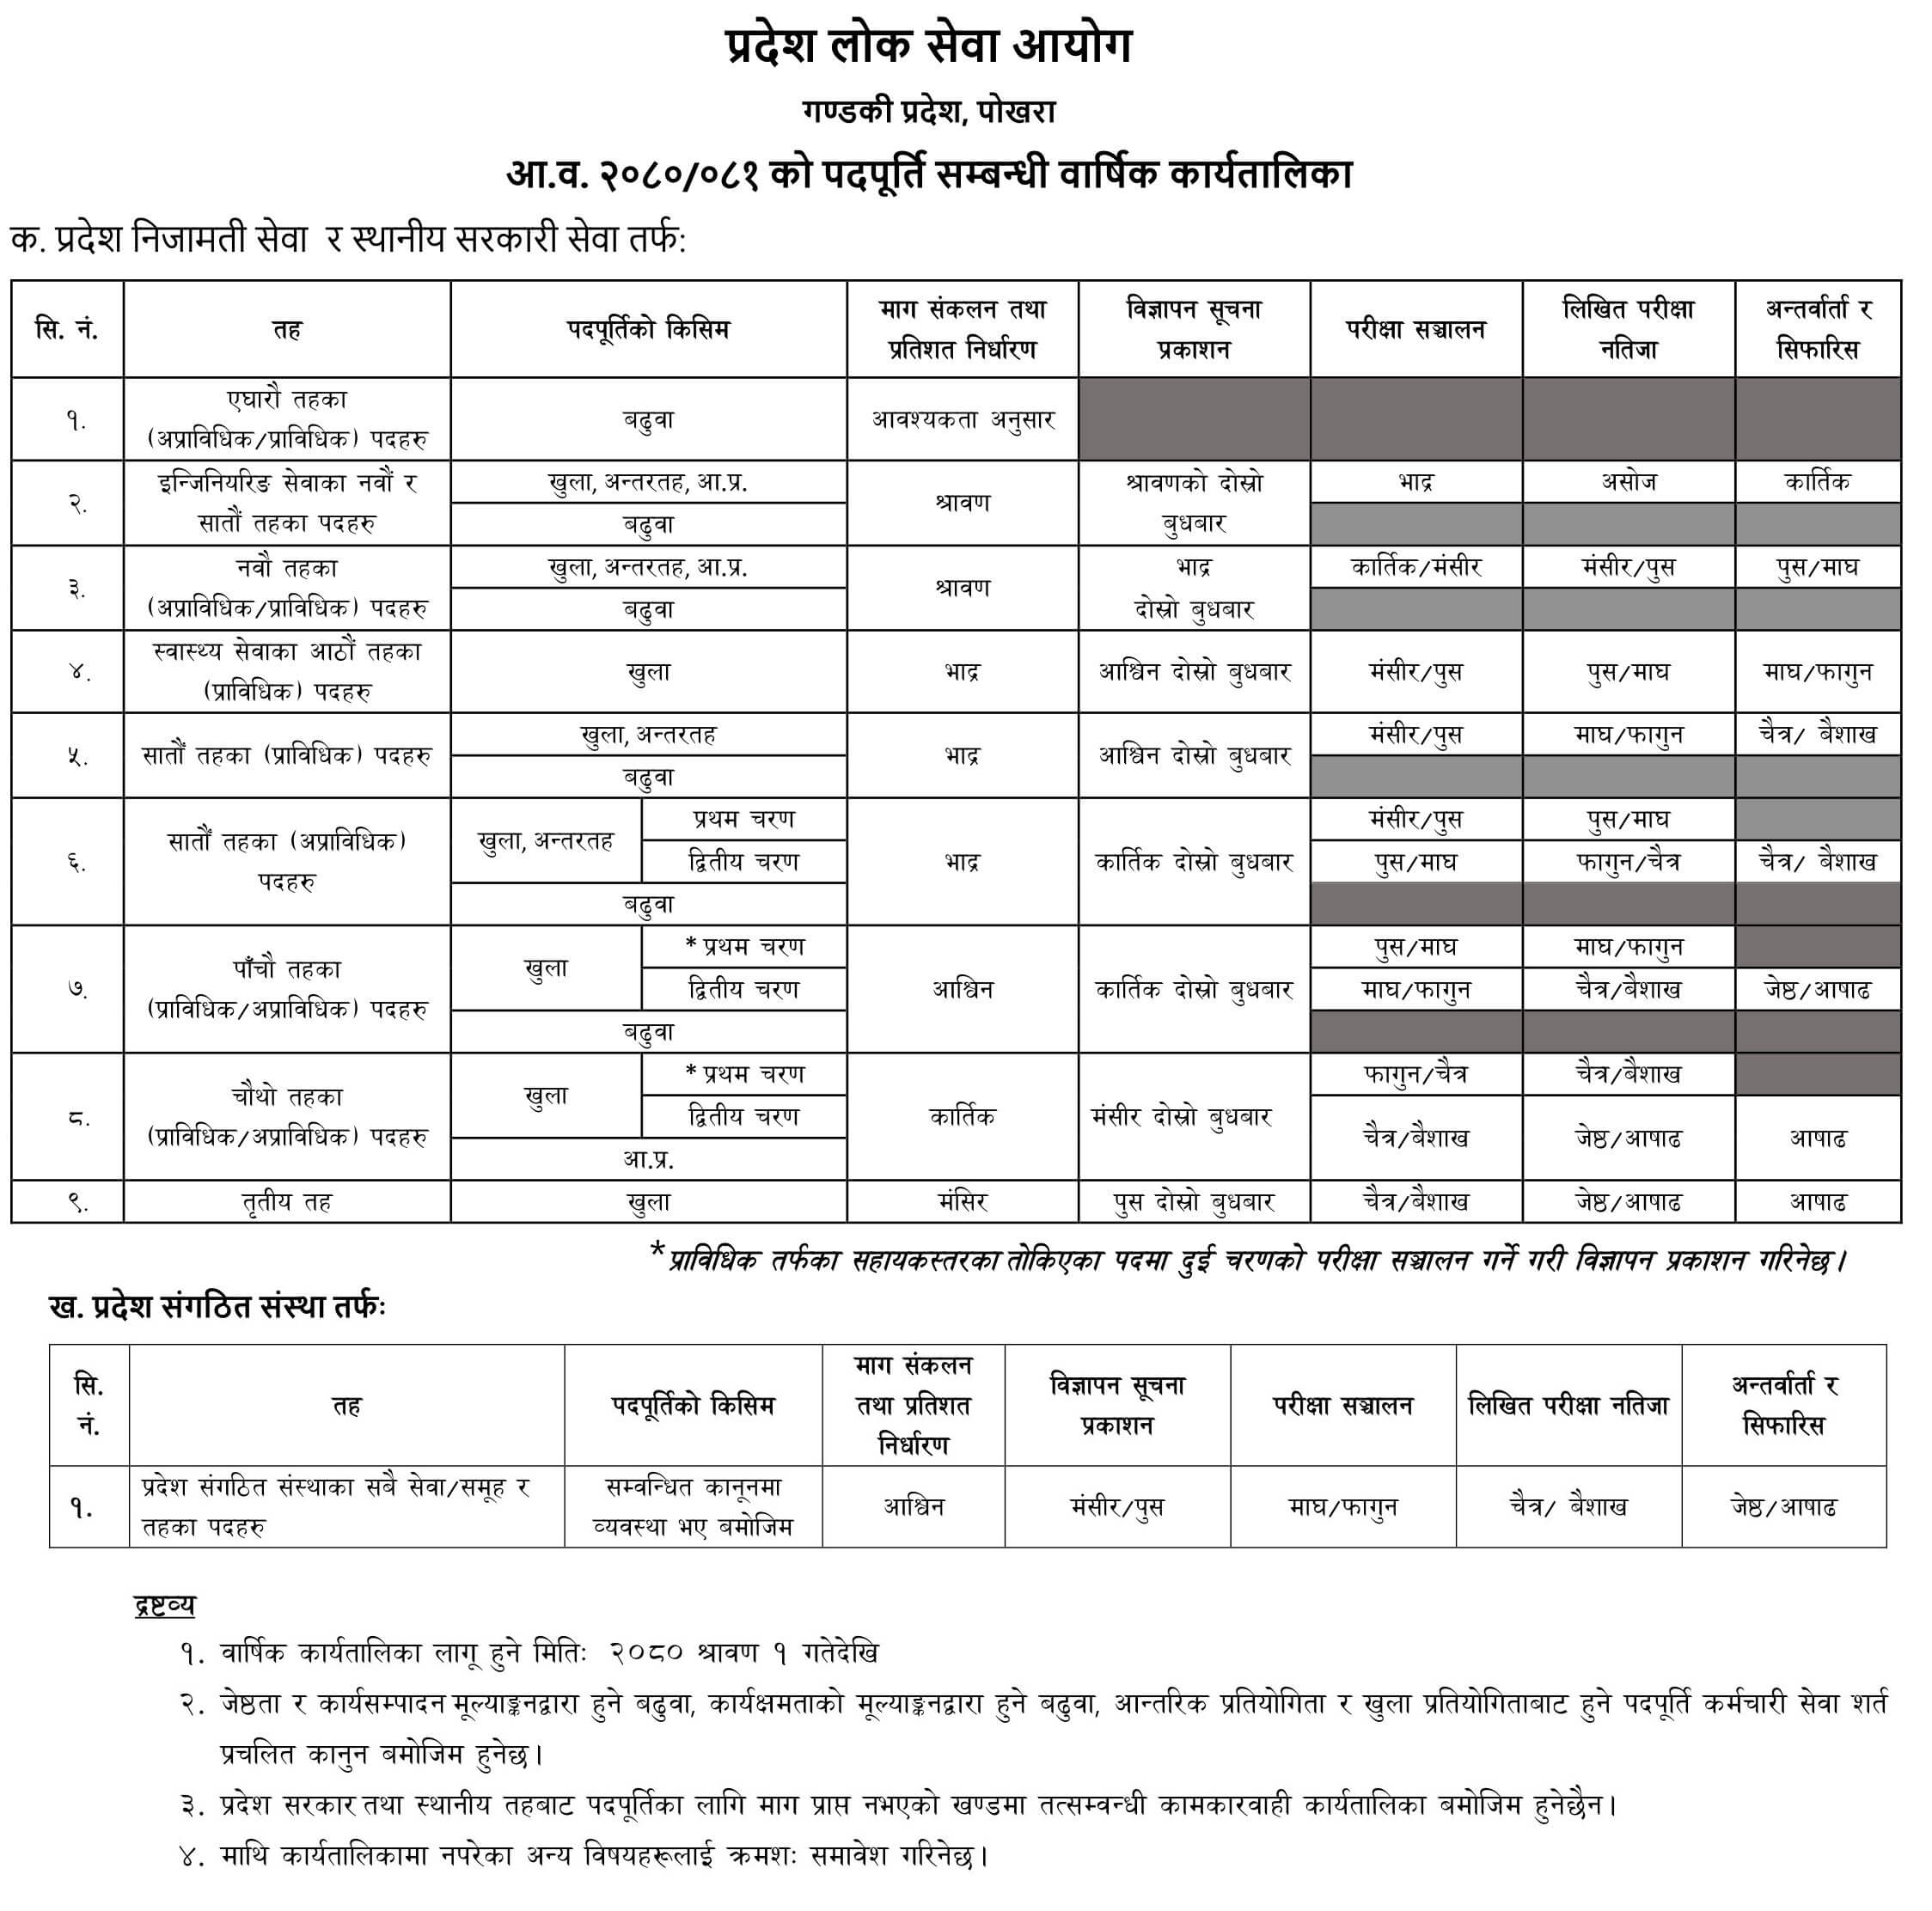 Gandaki Pradesh Lok Sewa Aayog Vacancy Yearly Calendar 2080 / 2081